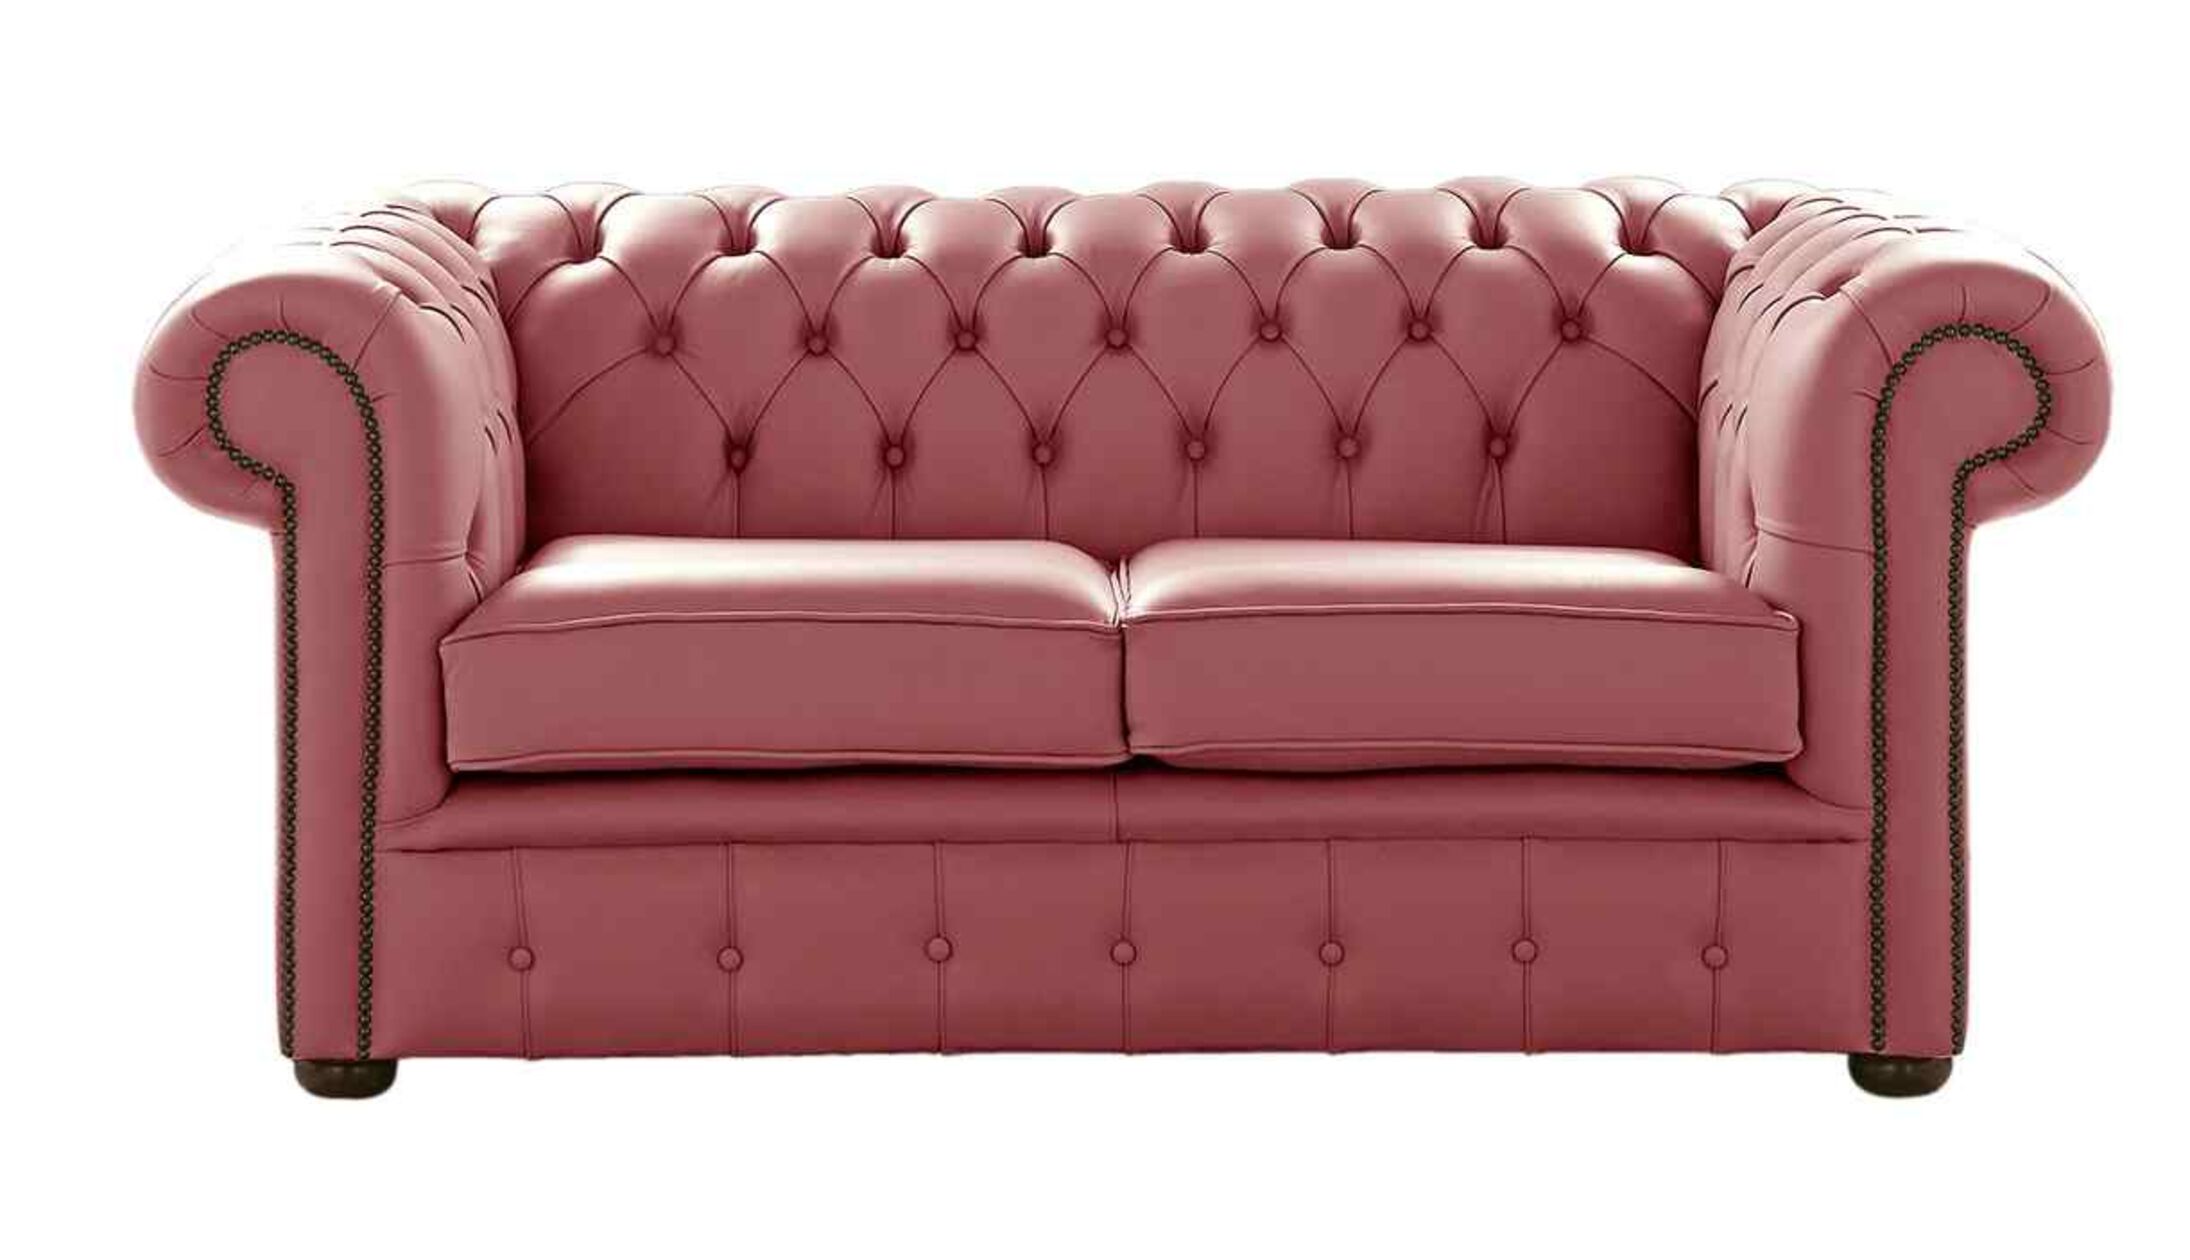 brick leather sofa bed